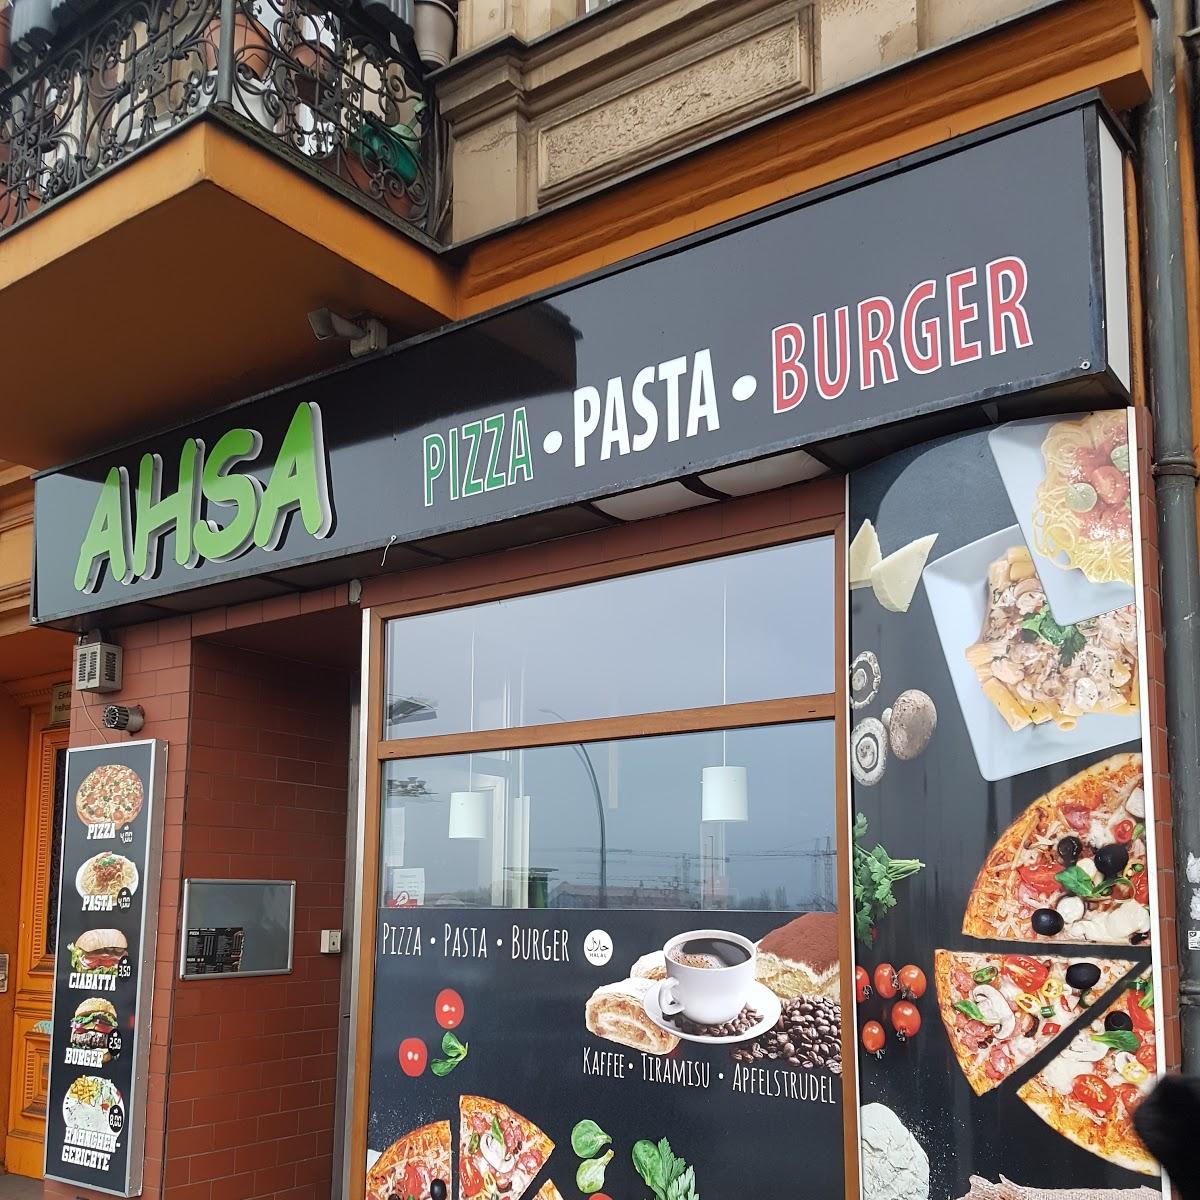 Restaurant "Pizza Ahsa - Pizzeria - Burger - Charlottenburg - Berlin" in Berlin